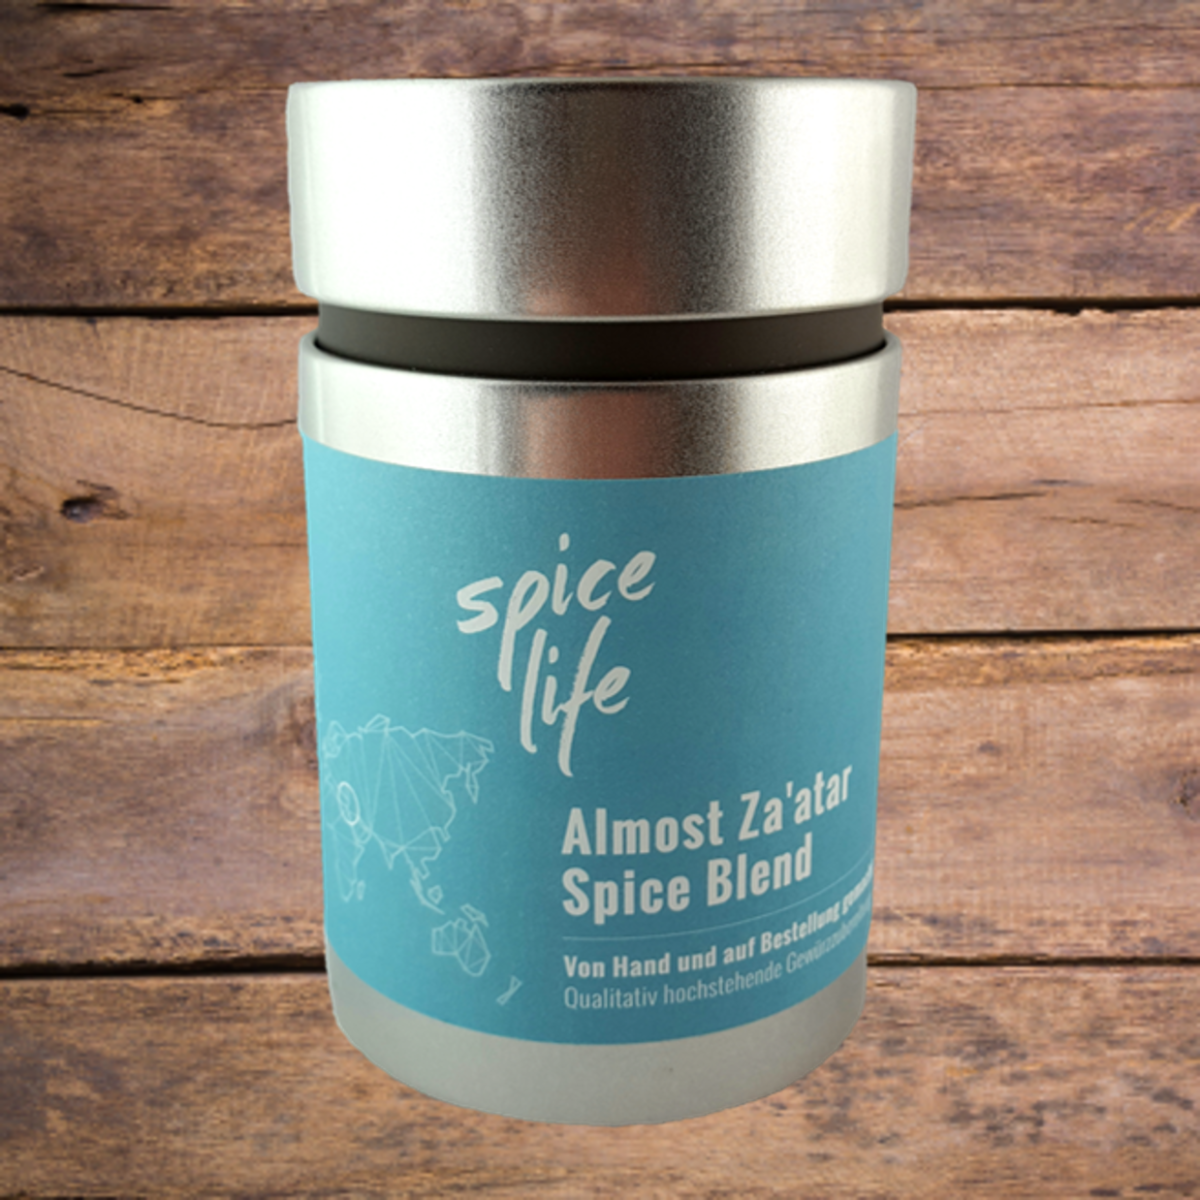 Almost Za'atar Spice Blend